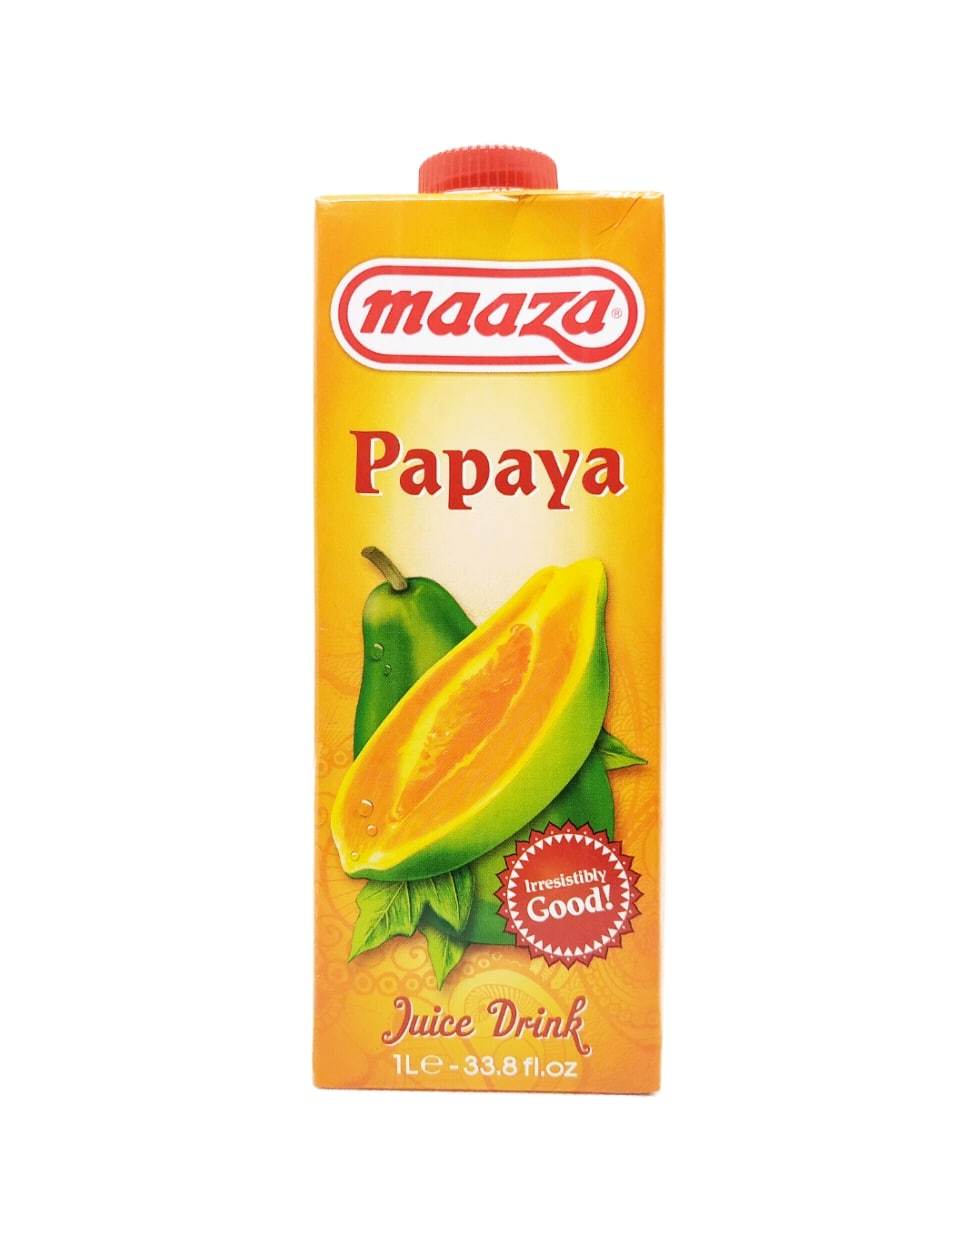 Produits orientaux en ligne: Maaza - Papaye